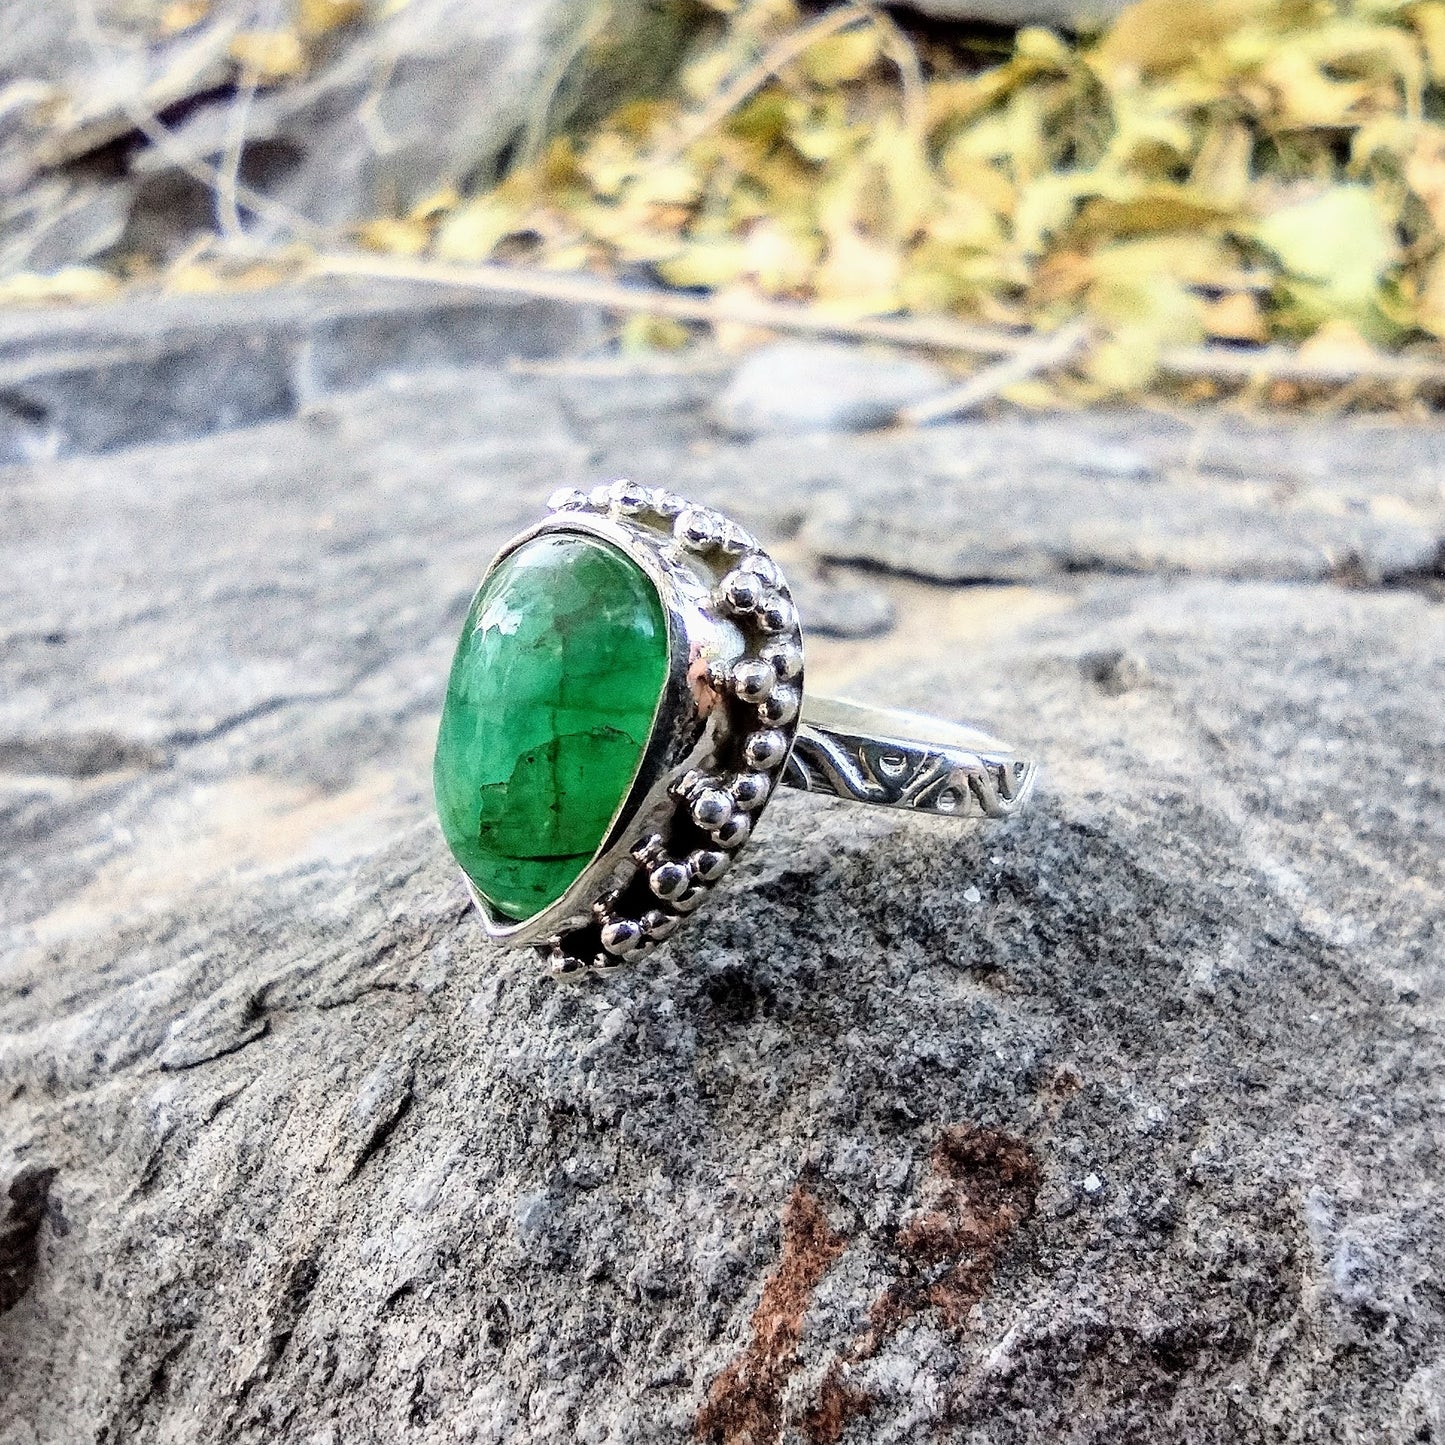 Sterling Silver Large Zambian Emerald Ring Size 7